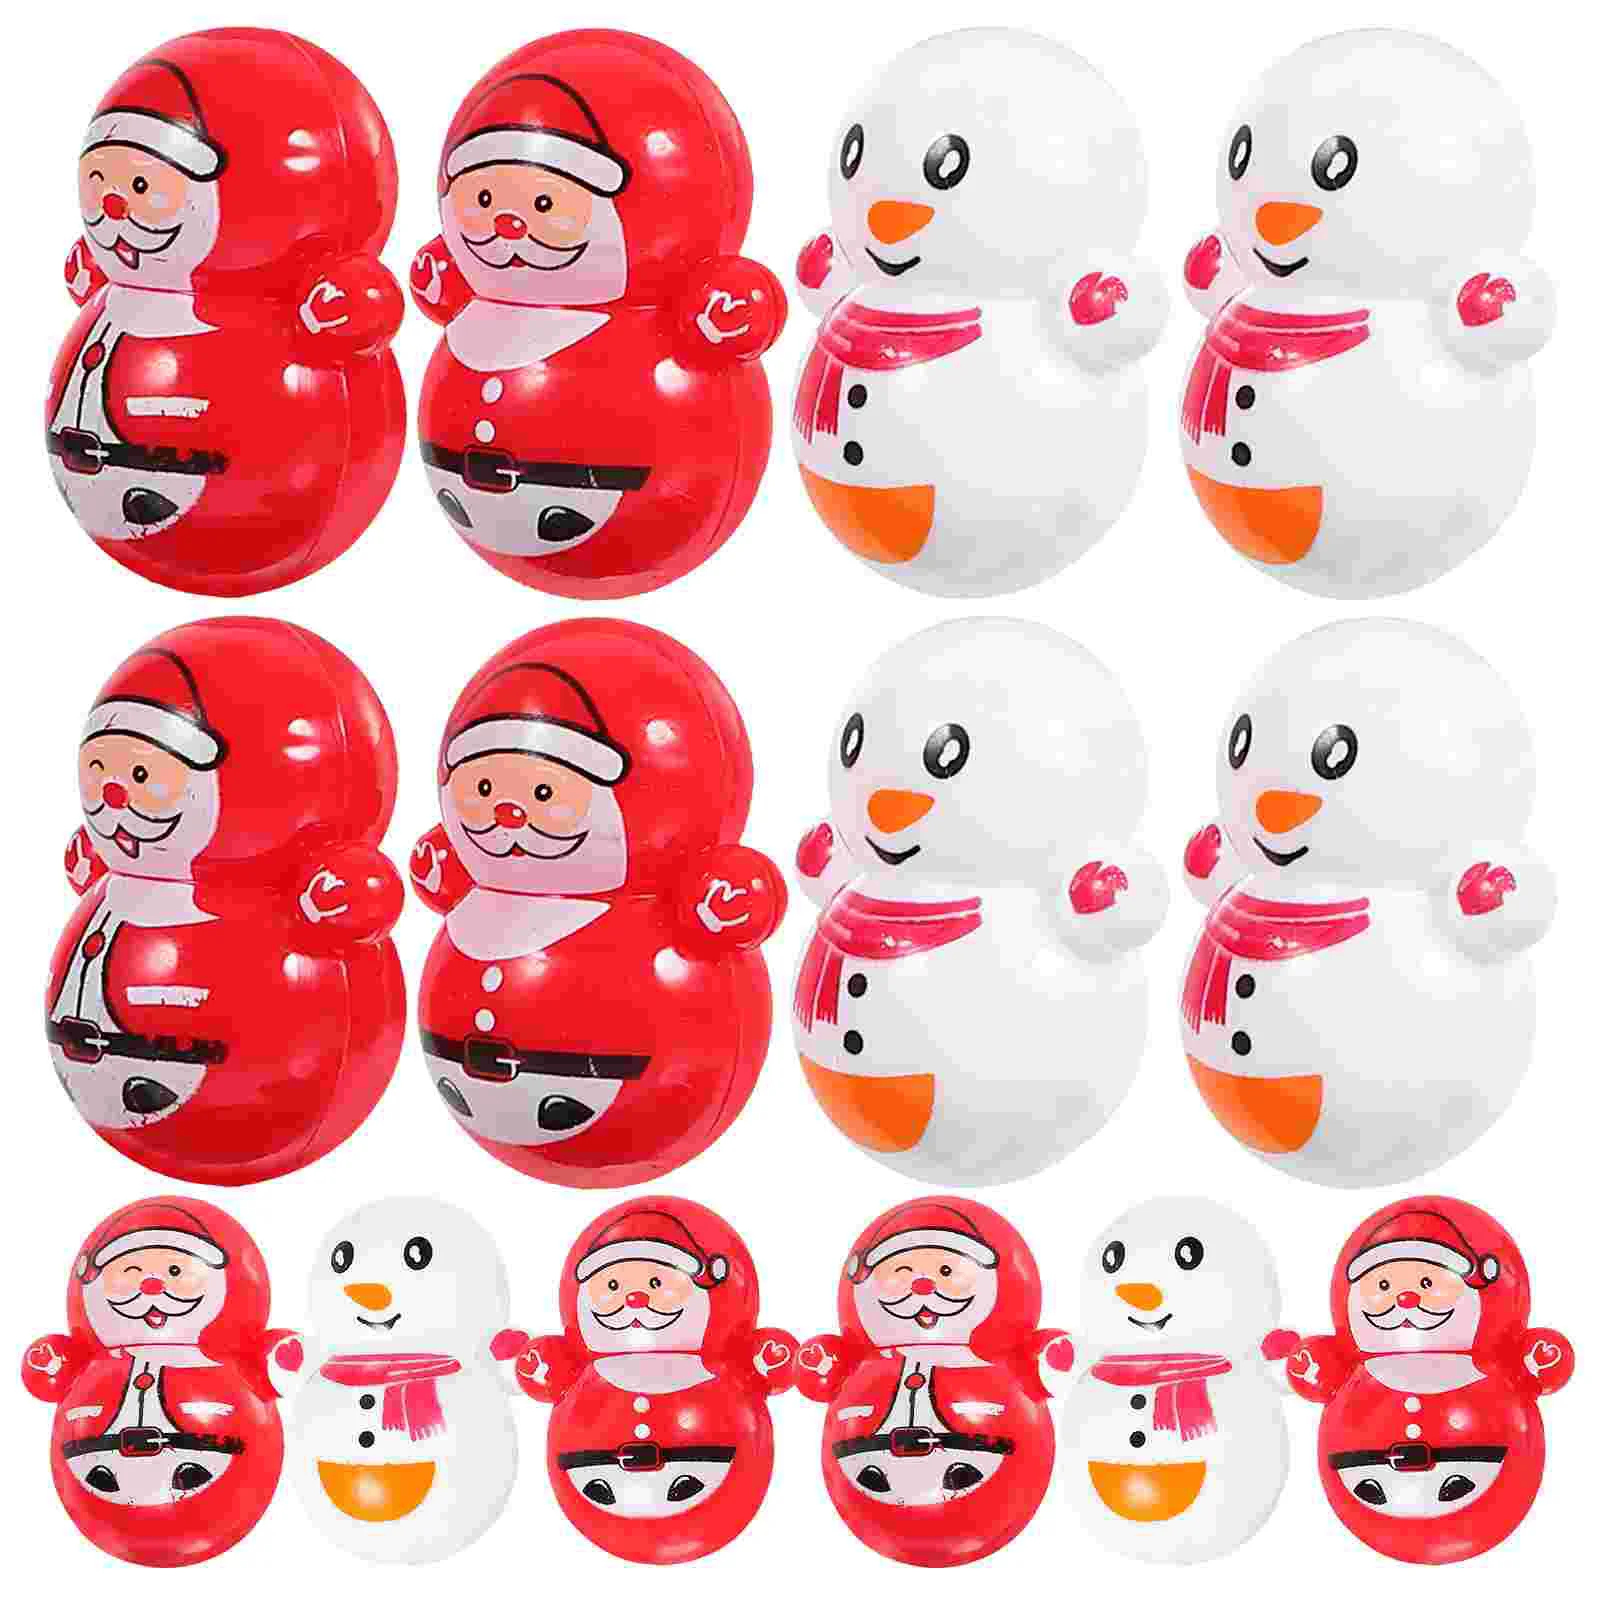 

60 Pcs Tumblers Snowmen Table Ornaments Christmas Themed Toys Decor Mini Santa Claus Gifts Child